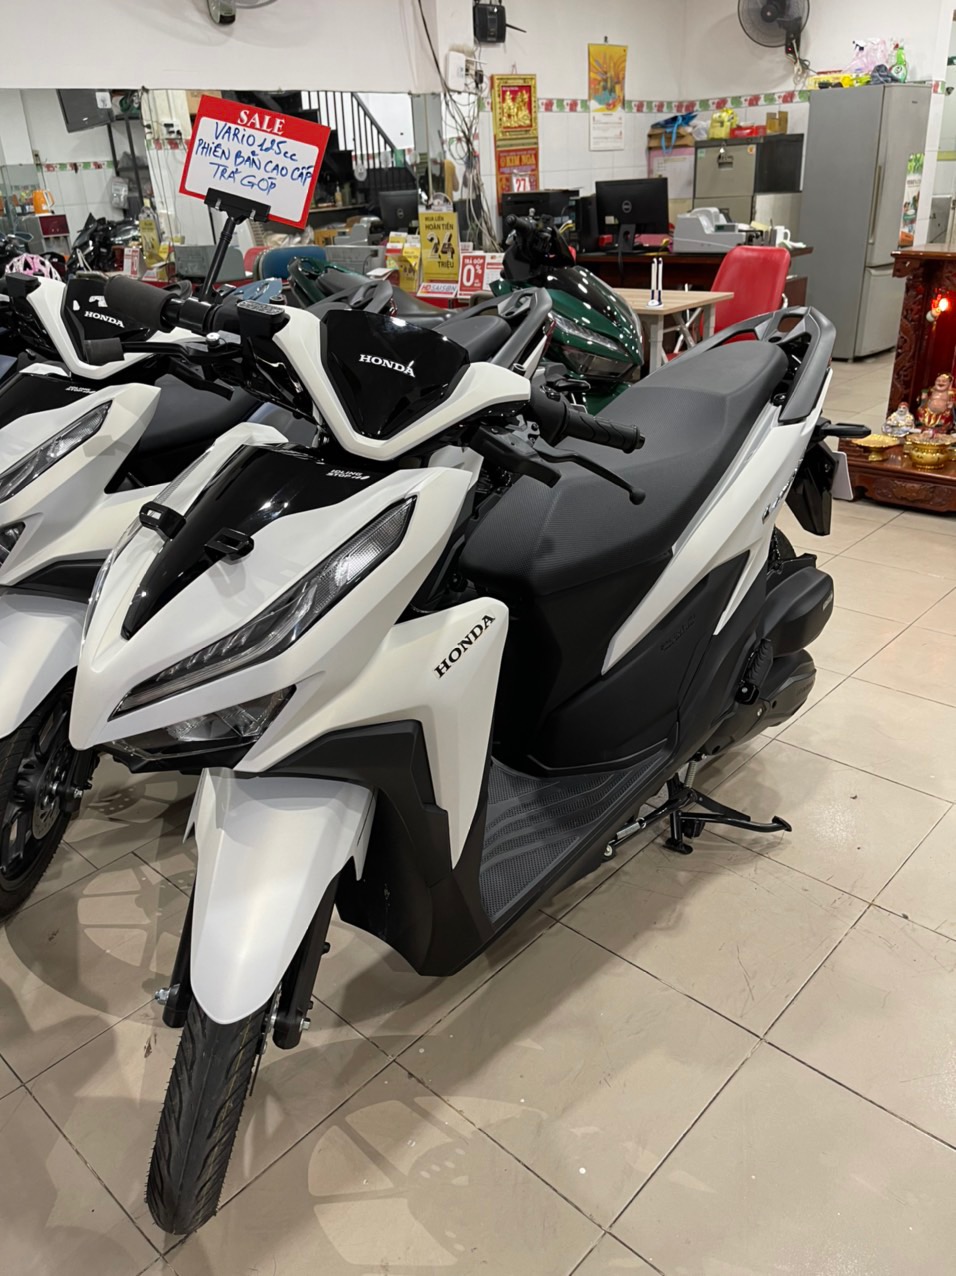 Xe máy Honda Vario 125 đen nhám nhập khẩu Indonesia 2022